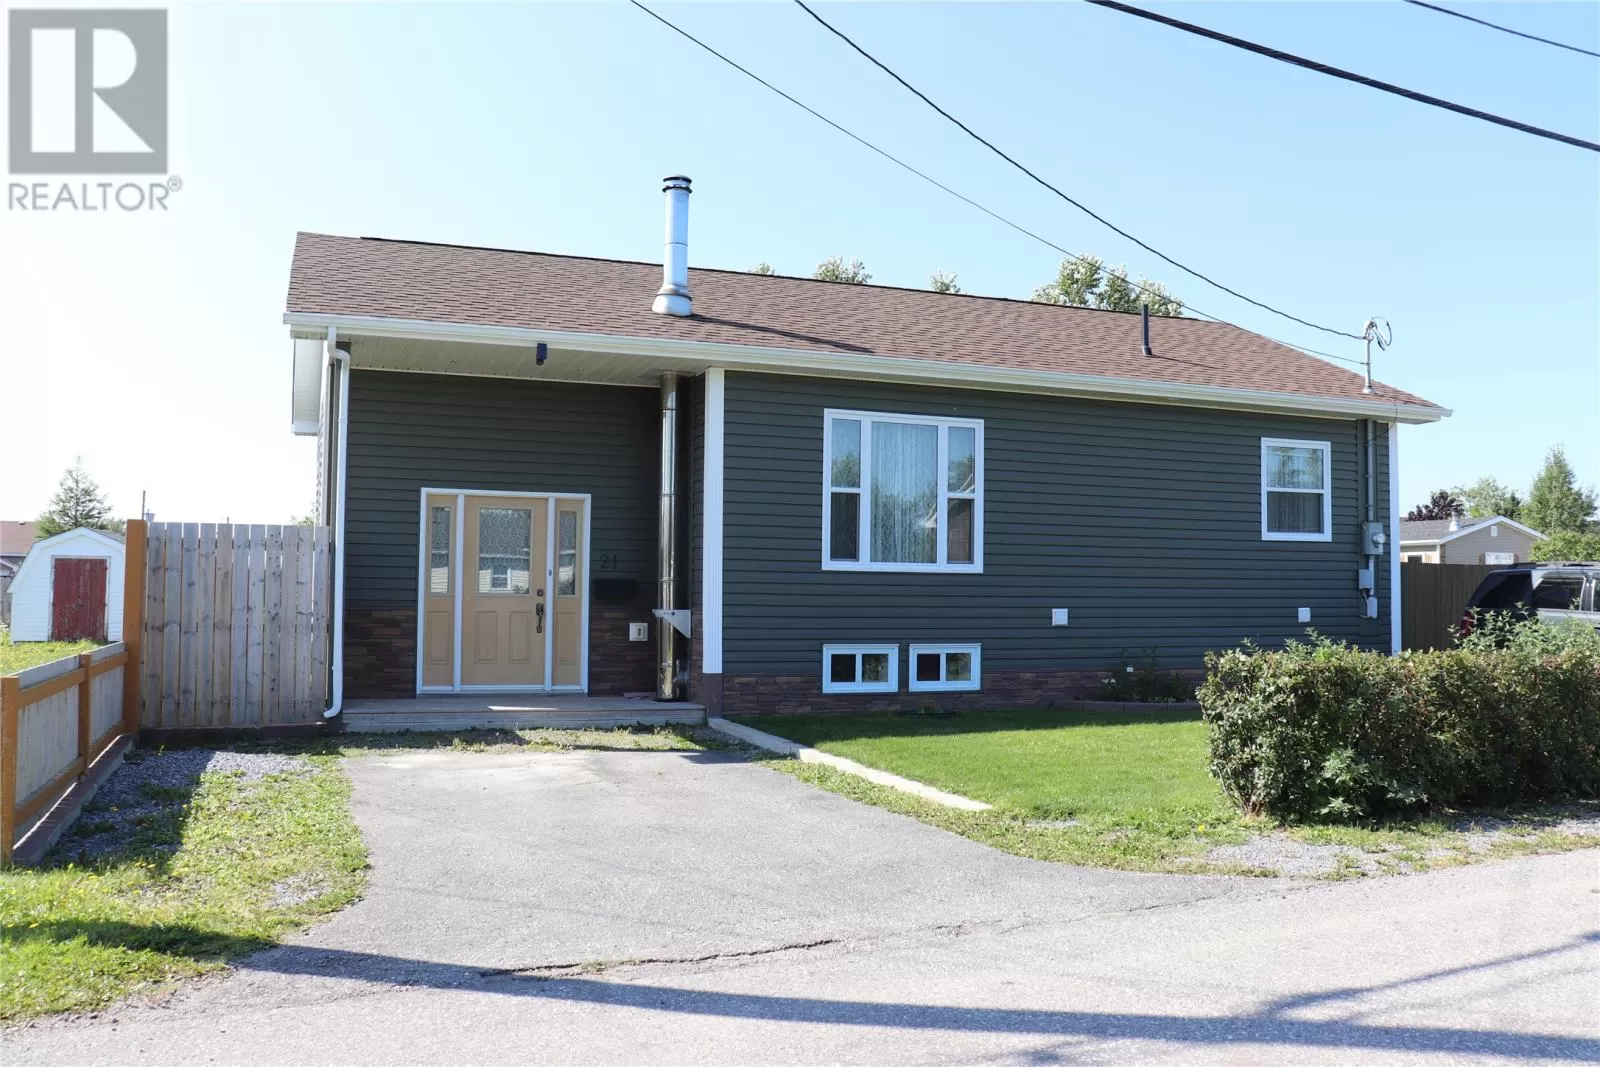 House for rent: 21 O'briens Drive, Stephenville, Newfoundland & Labrador A2N 2B2